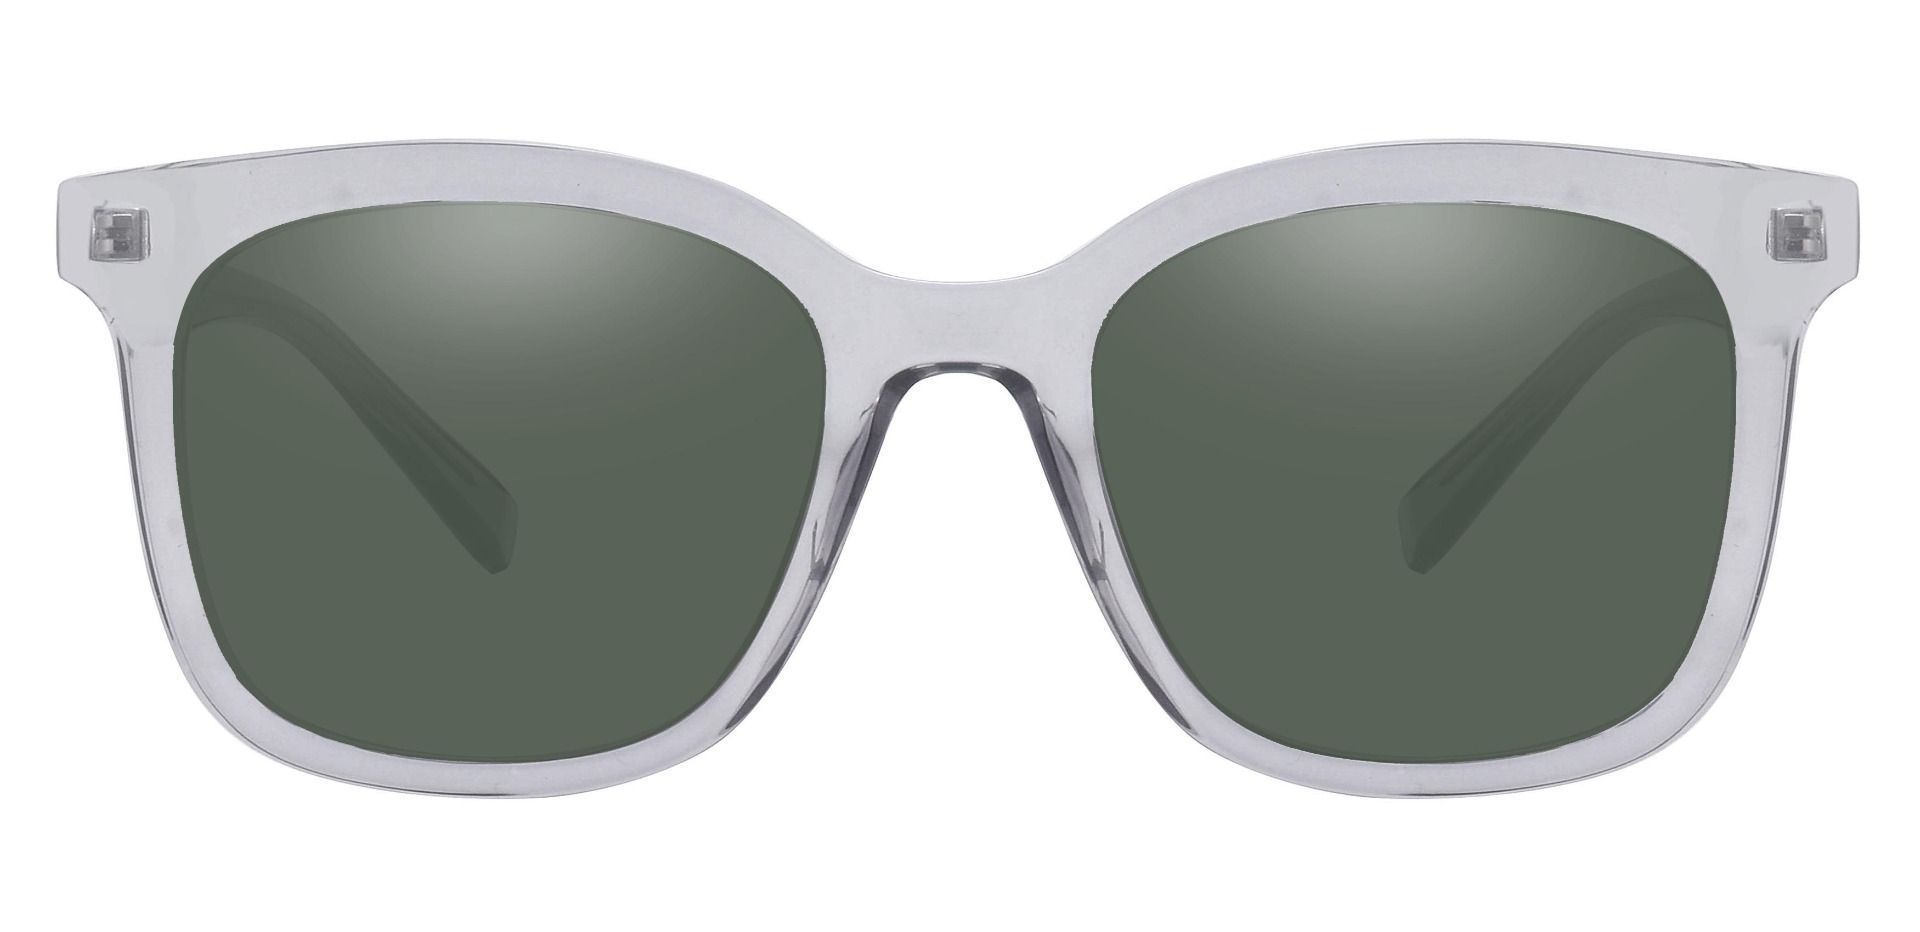 Irving Square Prescription Sunglasses - Gray Frame With Green Lenses